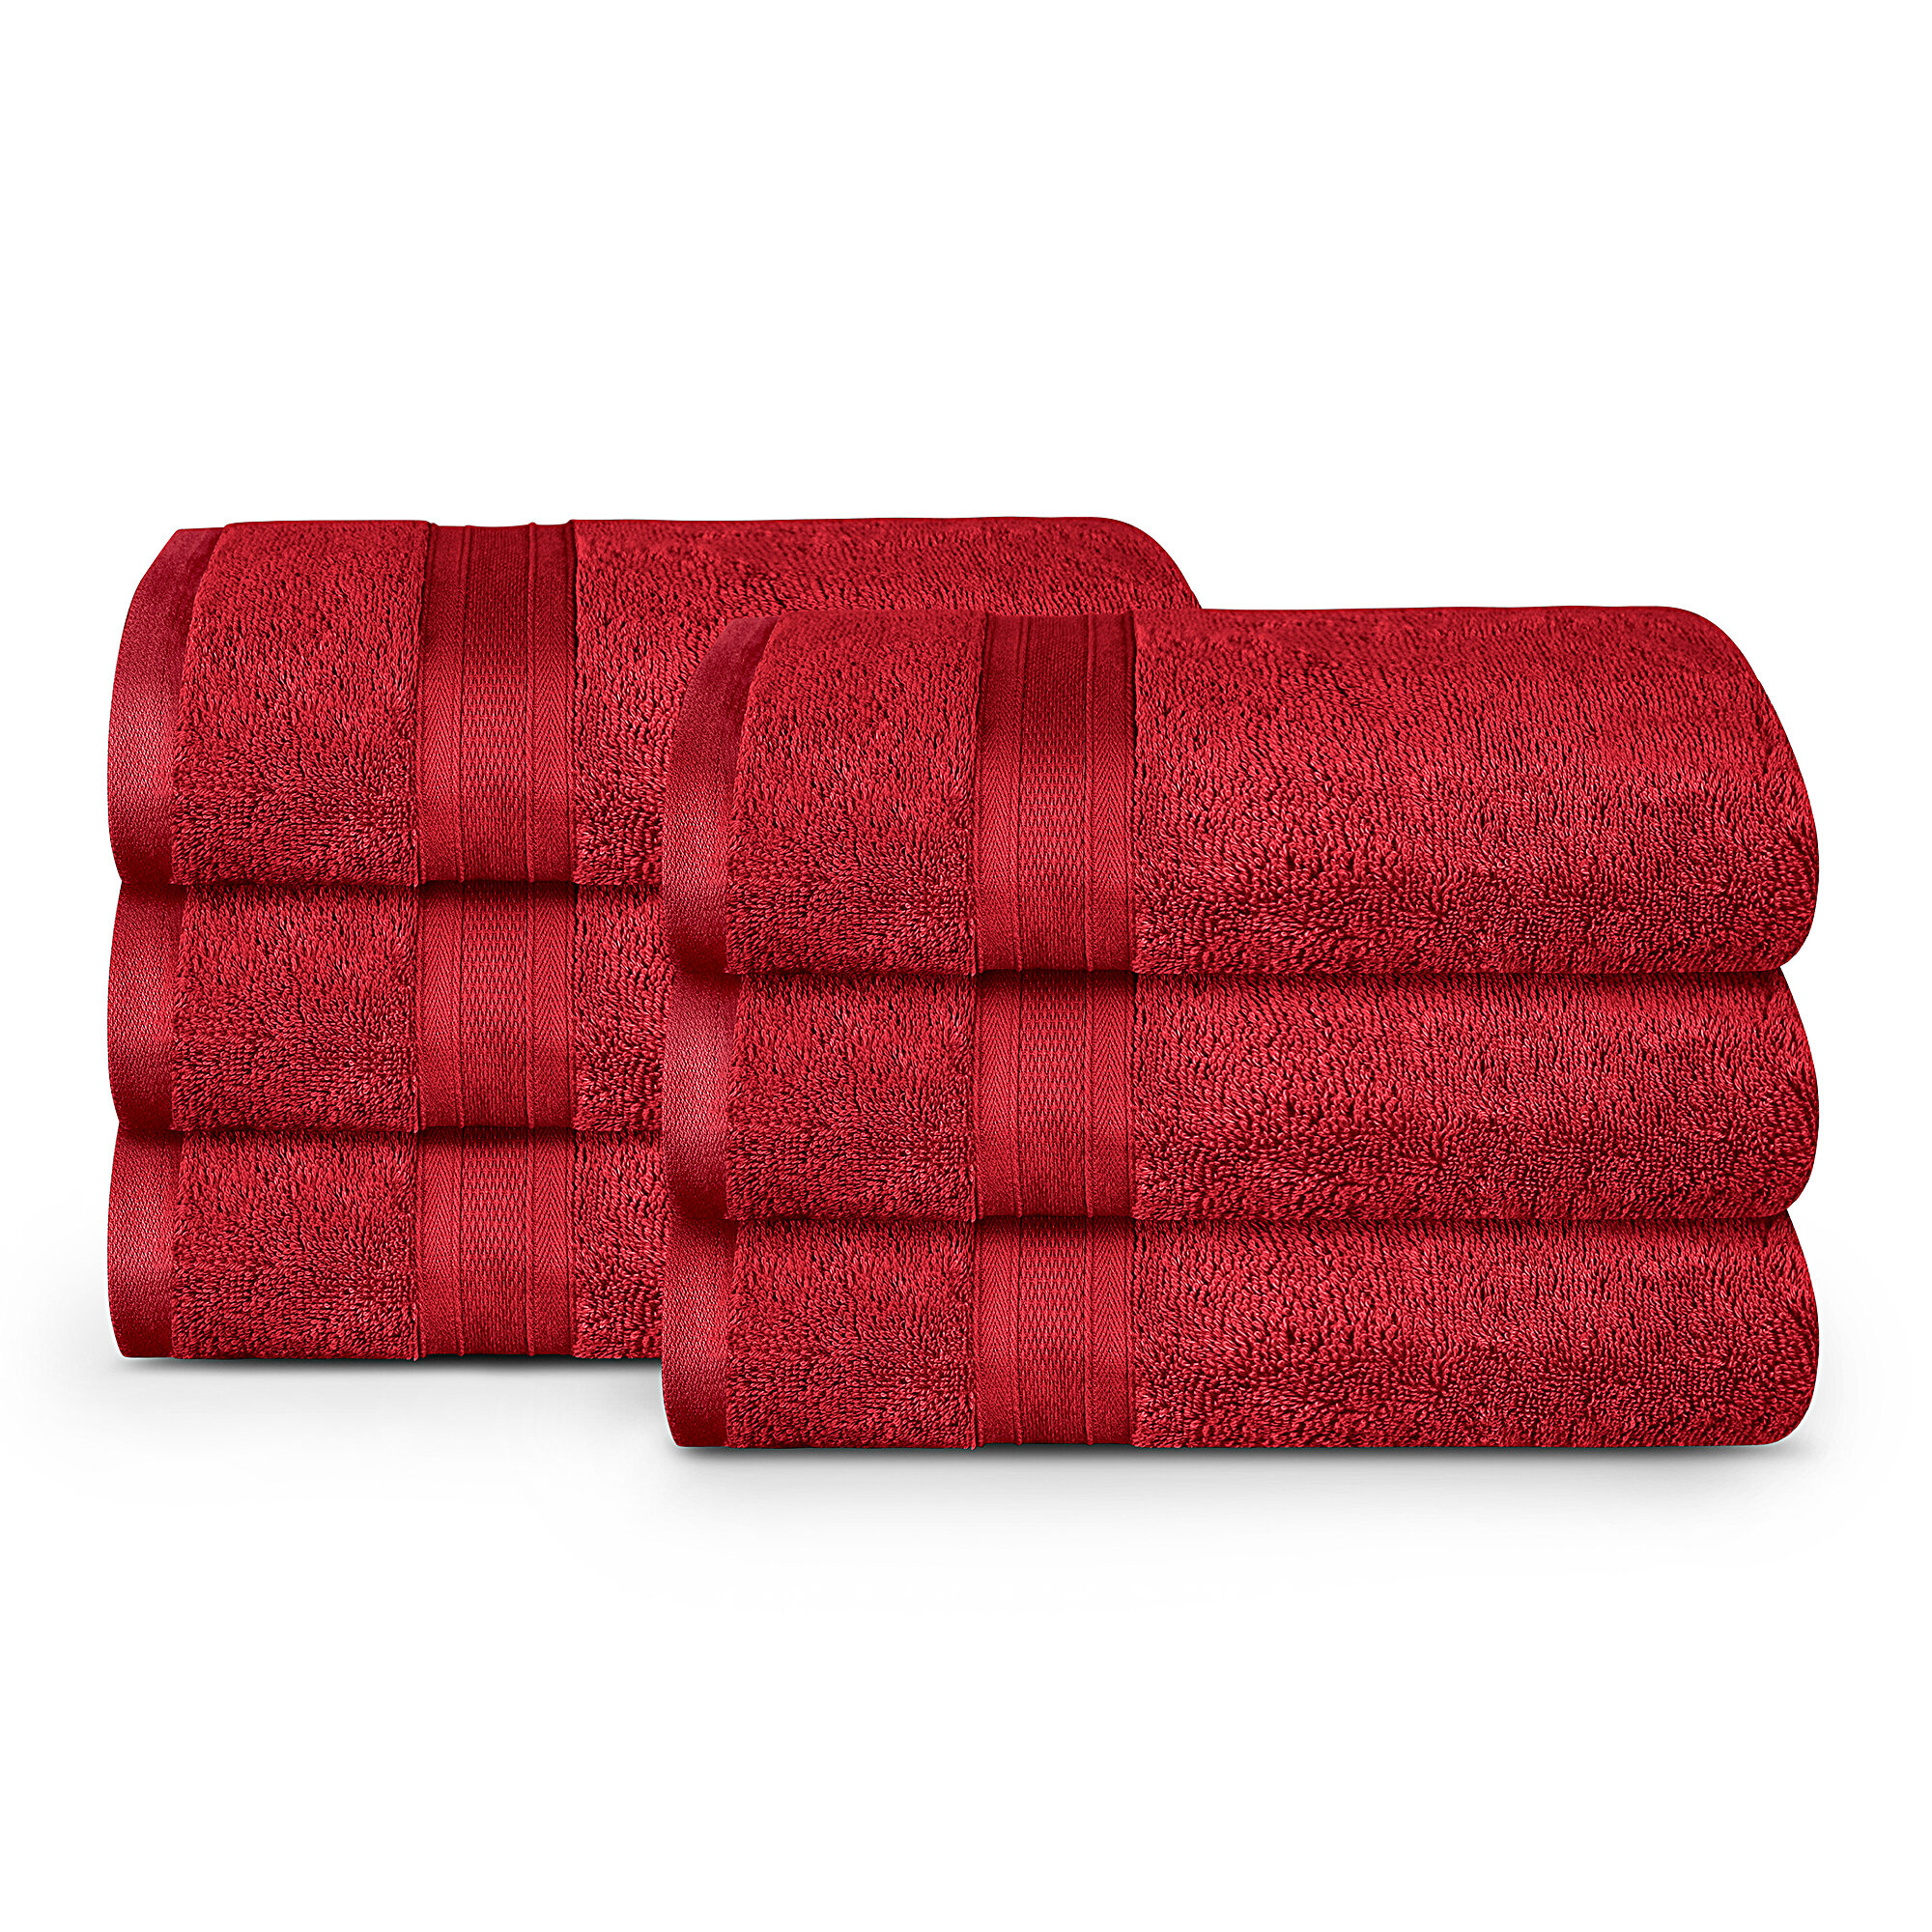 Trident Soft N Plush 6 Piece Cotton Highly Absorbent, Super Soft Washcloths/Hand/Bath Towels, Black, Size: 6 Piece Set